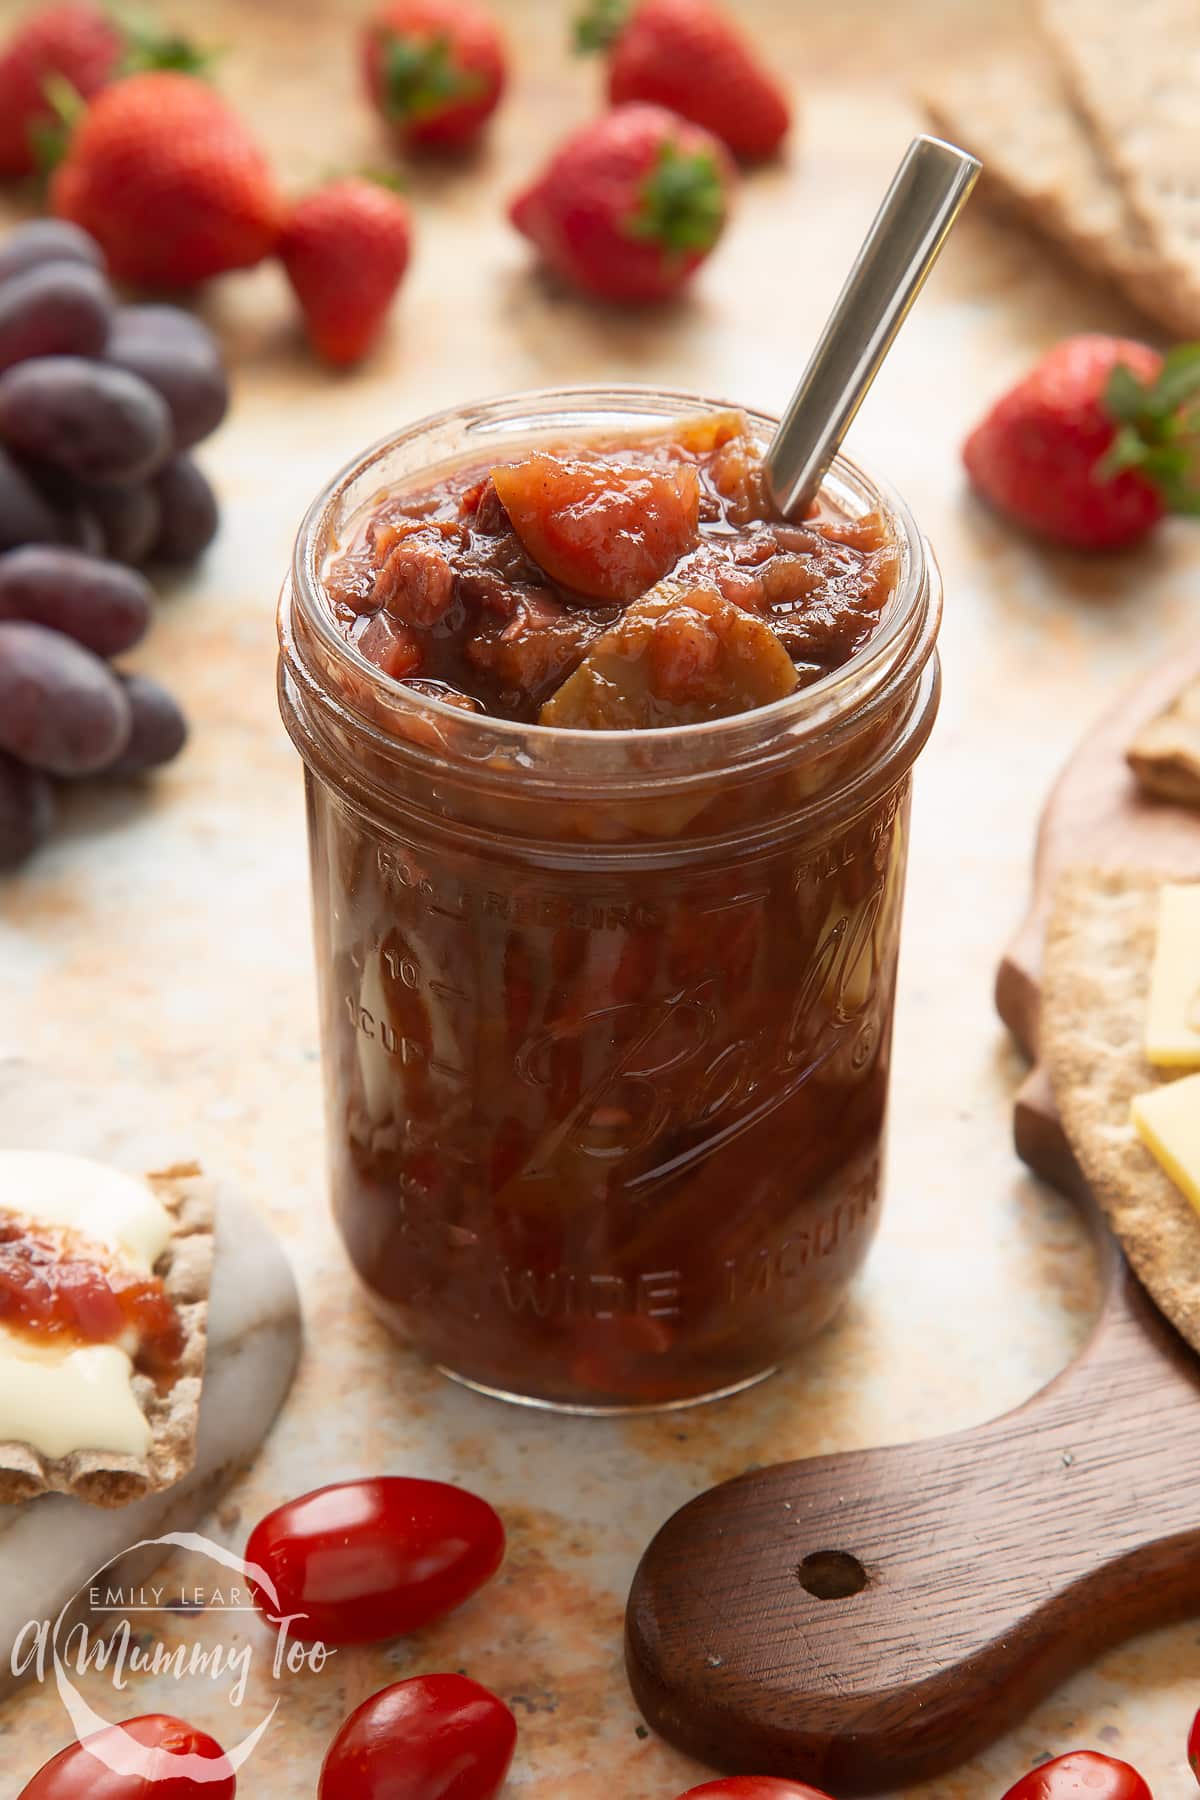 Fruit chutney recipe in a jar with a spoon.